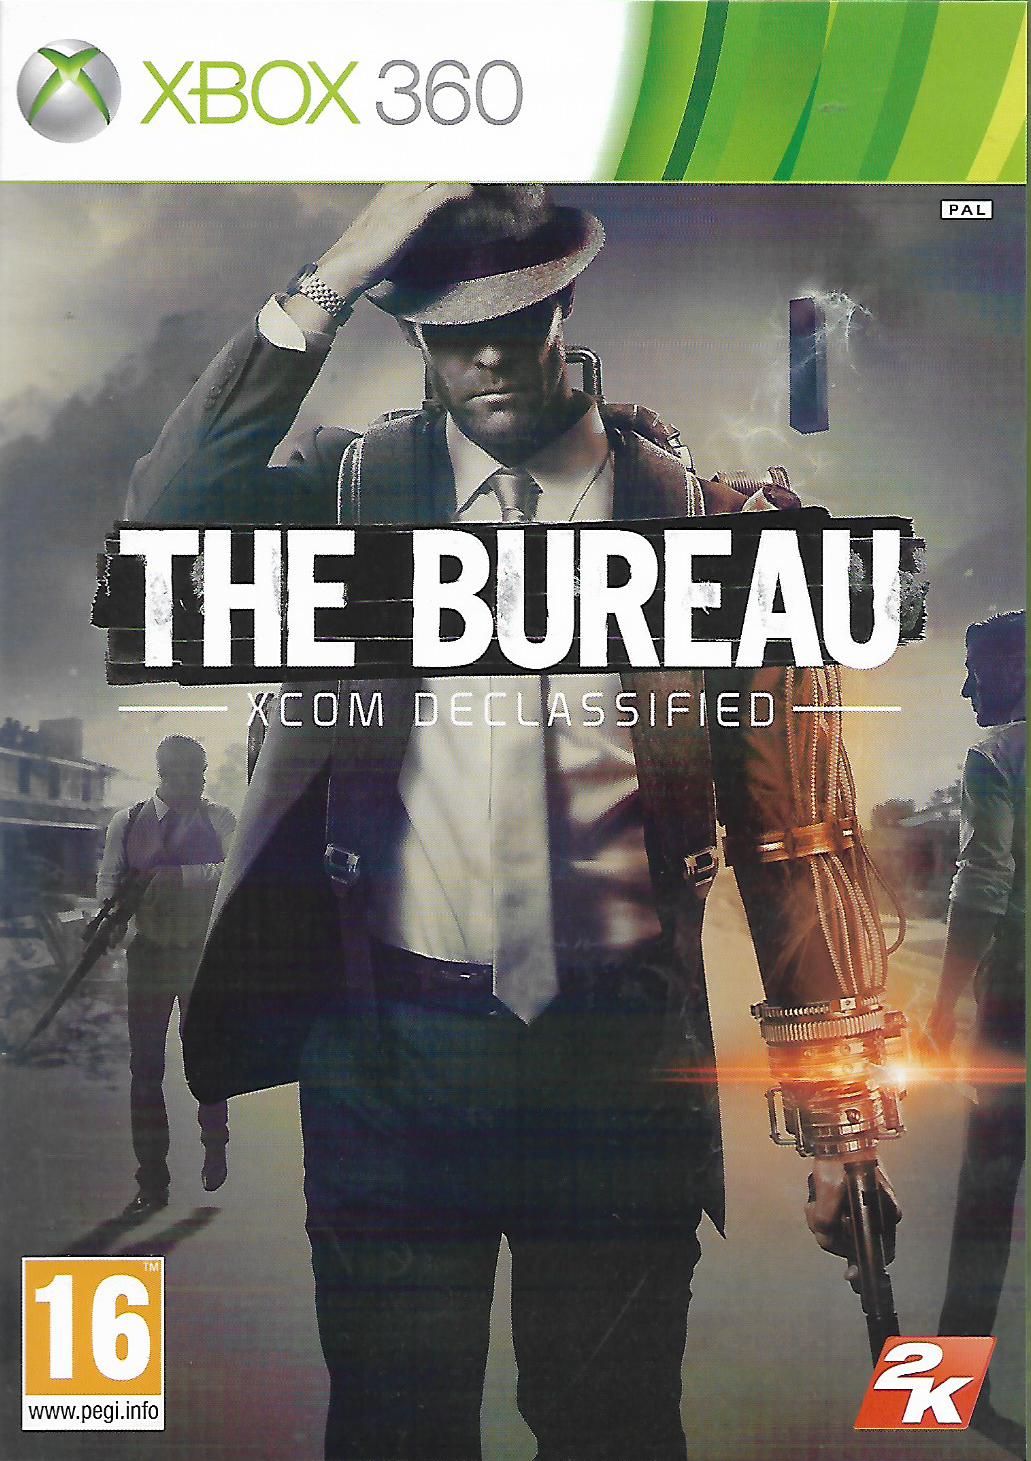 THE BUREAU - XCOM DECLASSIFIED (XBOX 360 - bazar)